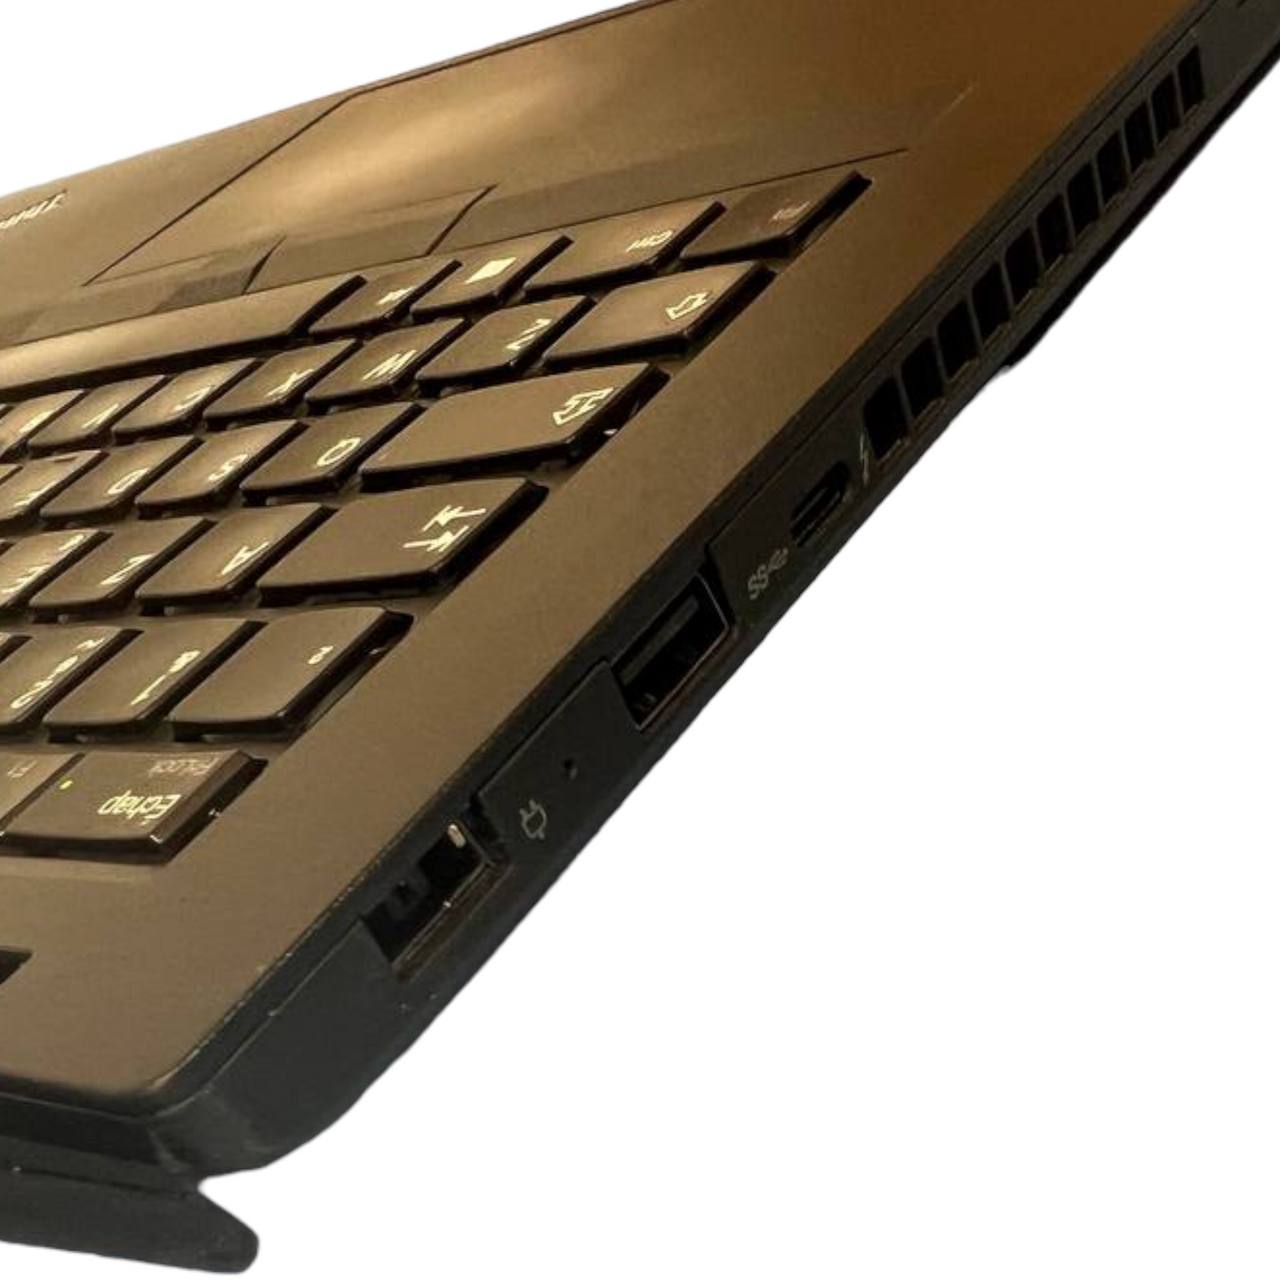 Lenovo Thinkpad T470, con Intel Core i5-6300u, 2360922R4